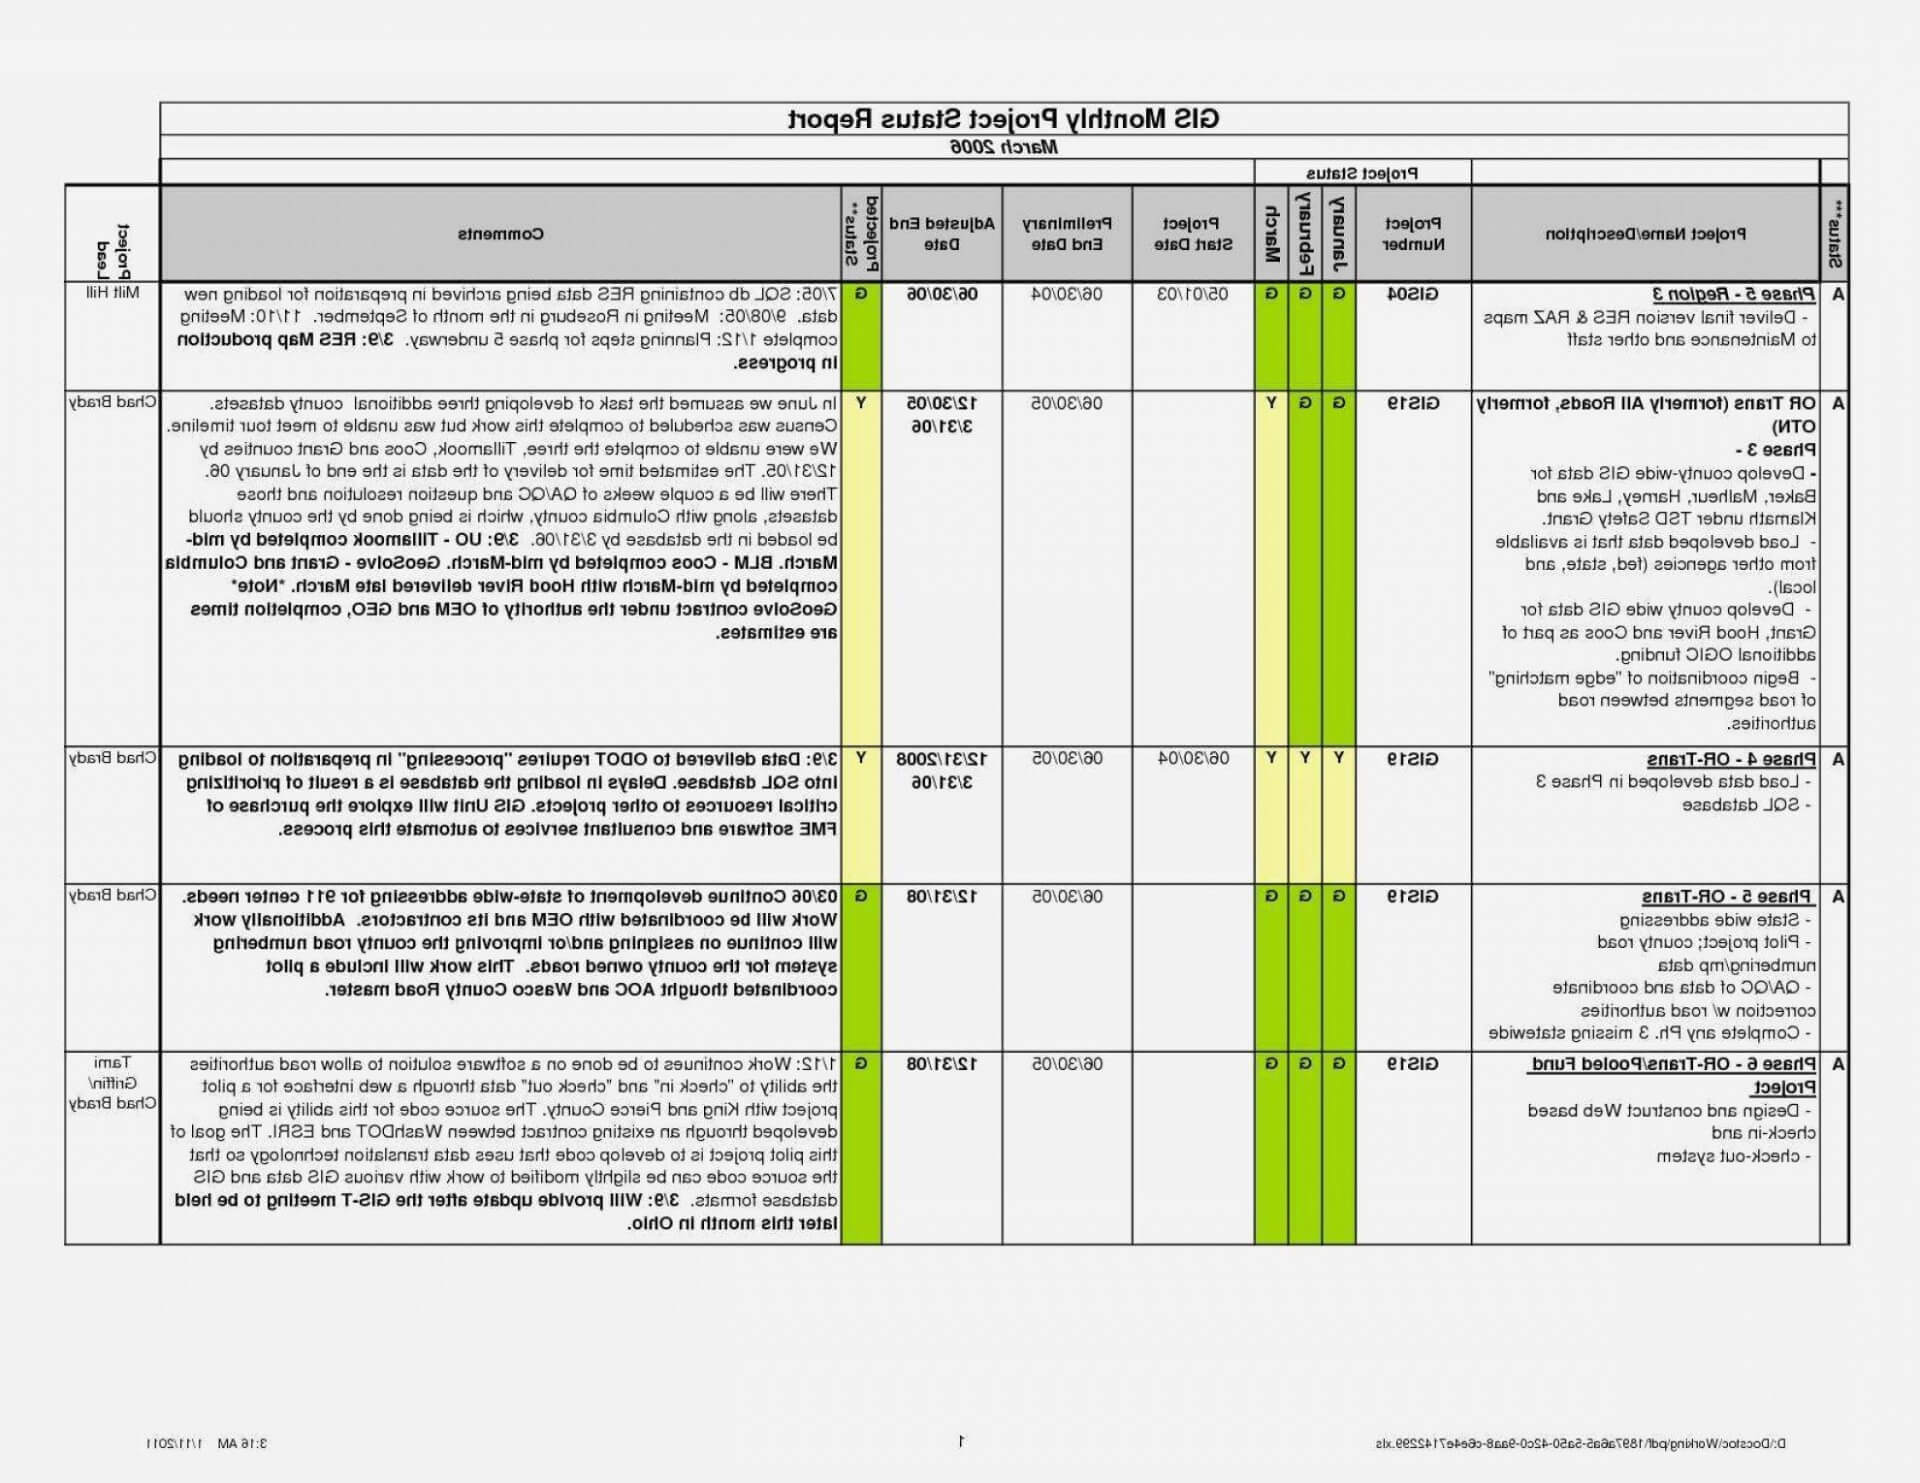 011 Project Progress Report Template Excel Ideas Management In Weekly Status Report Template Excel